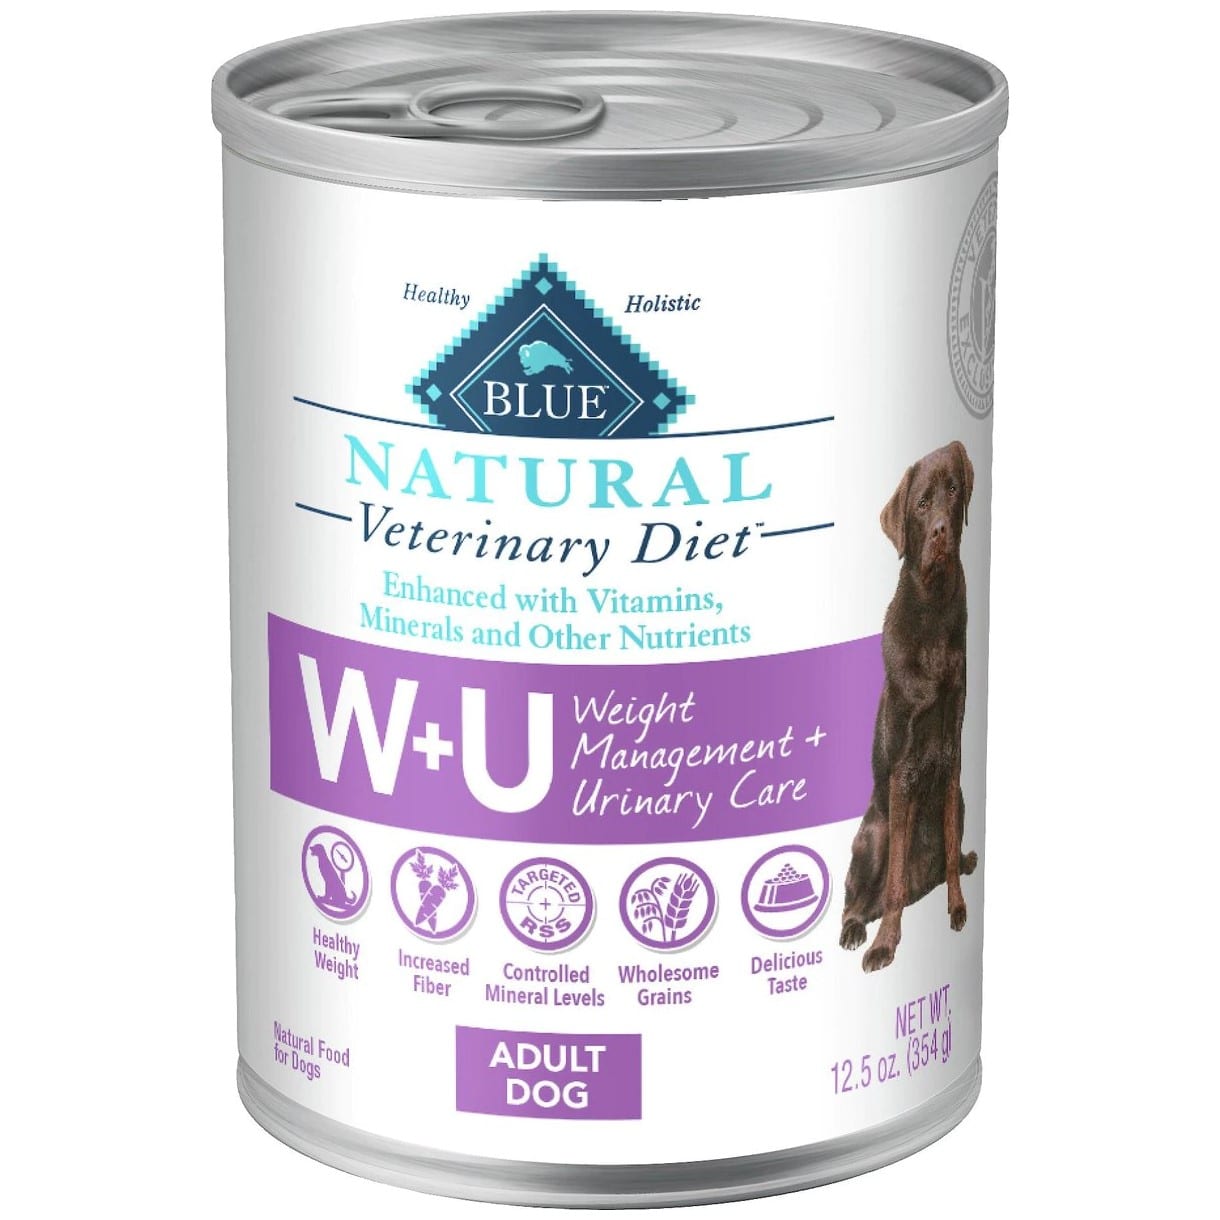 Blue Buffalo Natural Veterinary Diet W+U Weight Management + Urinary Care Chicken Wet Dog Food